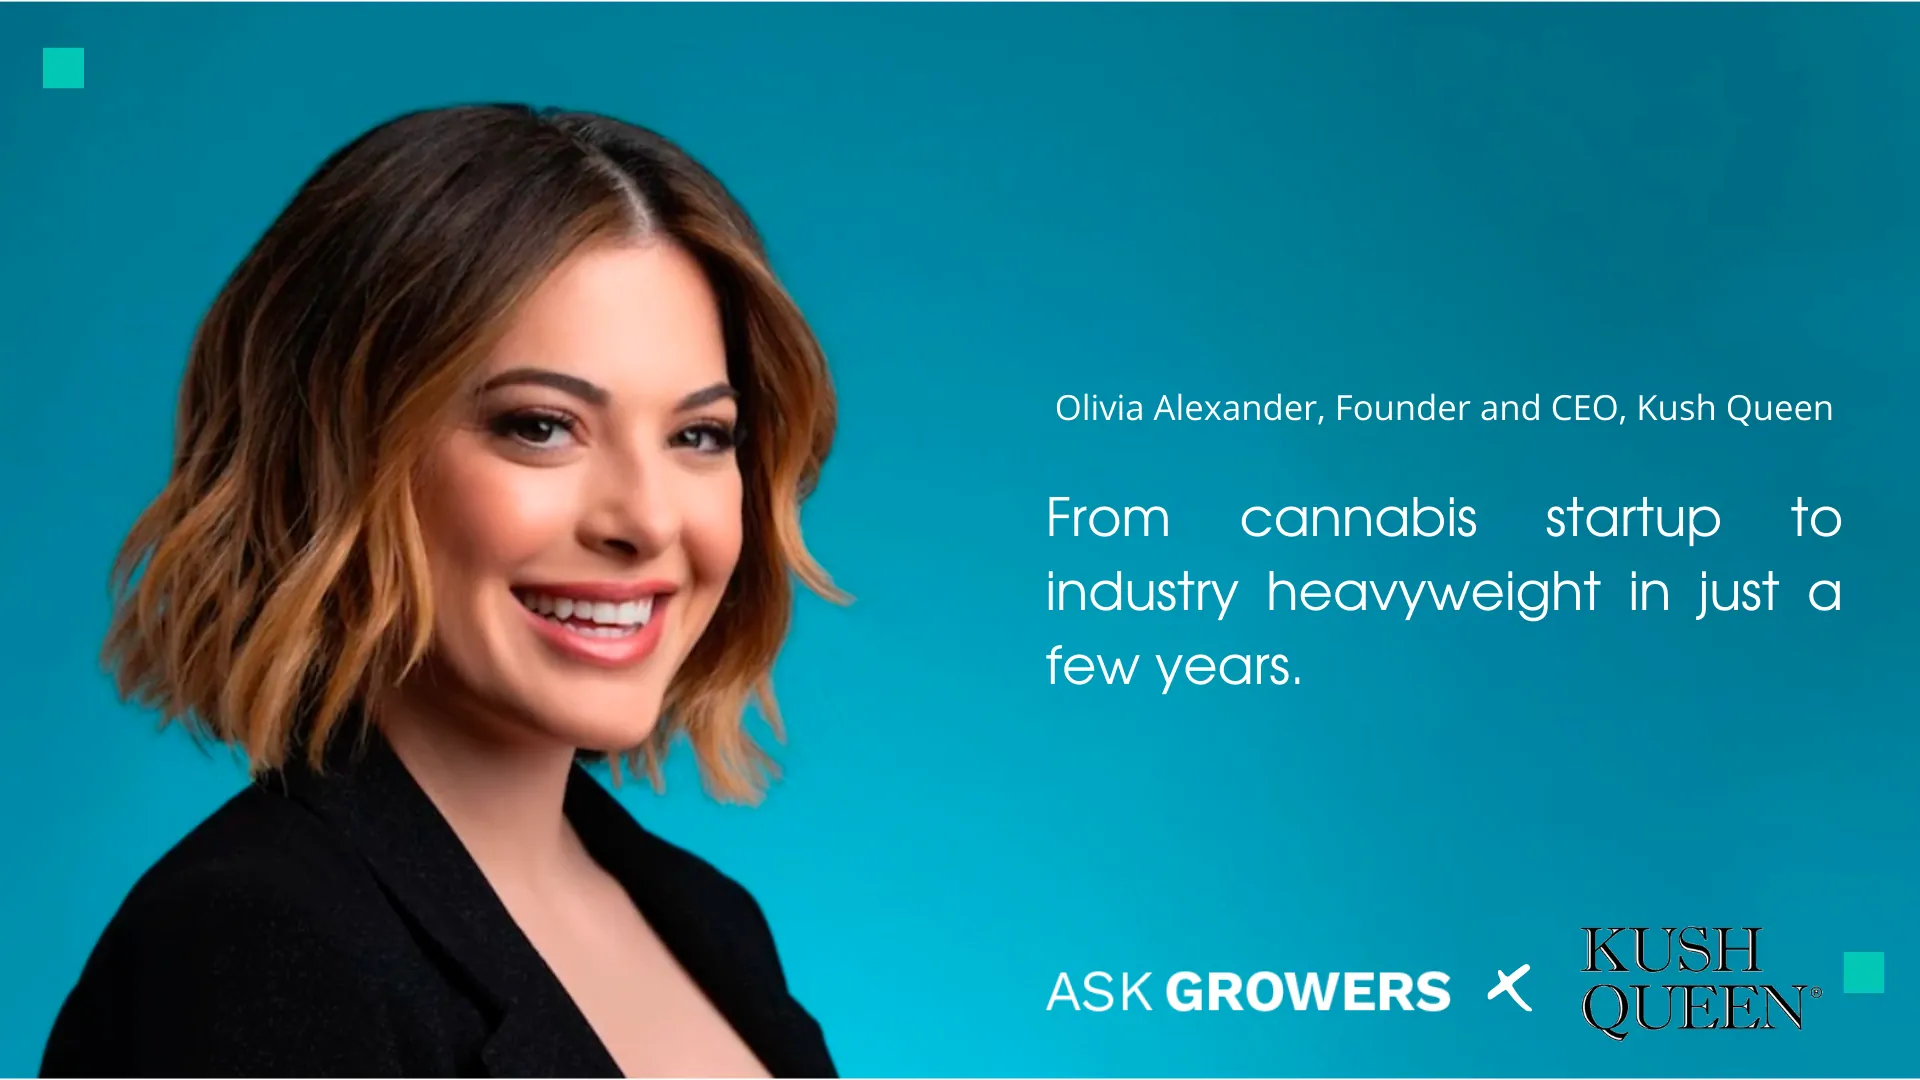 Grower Stories #9: Olivia Alexander